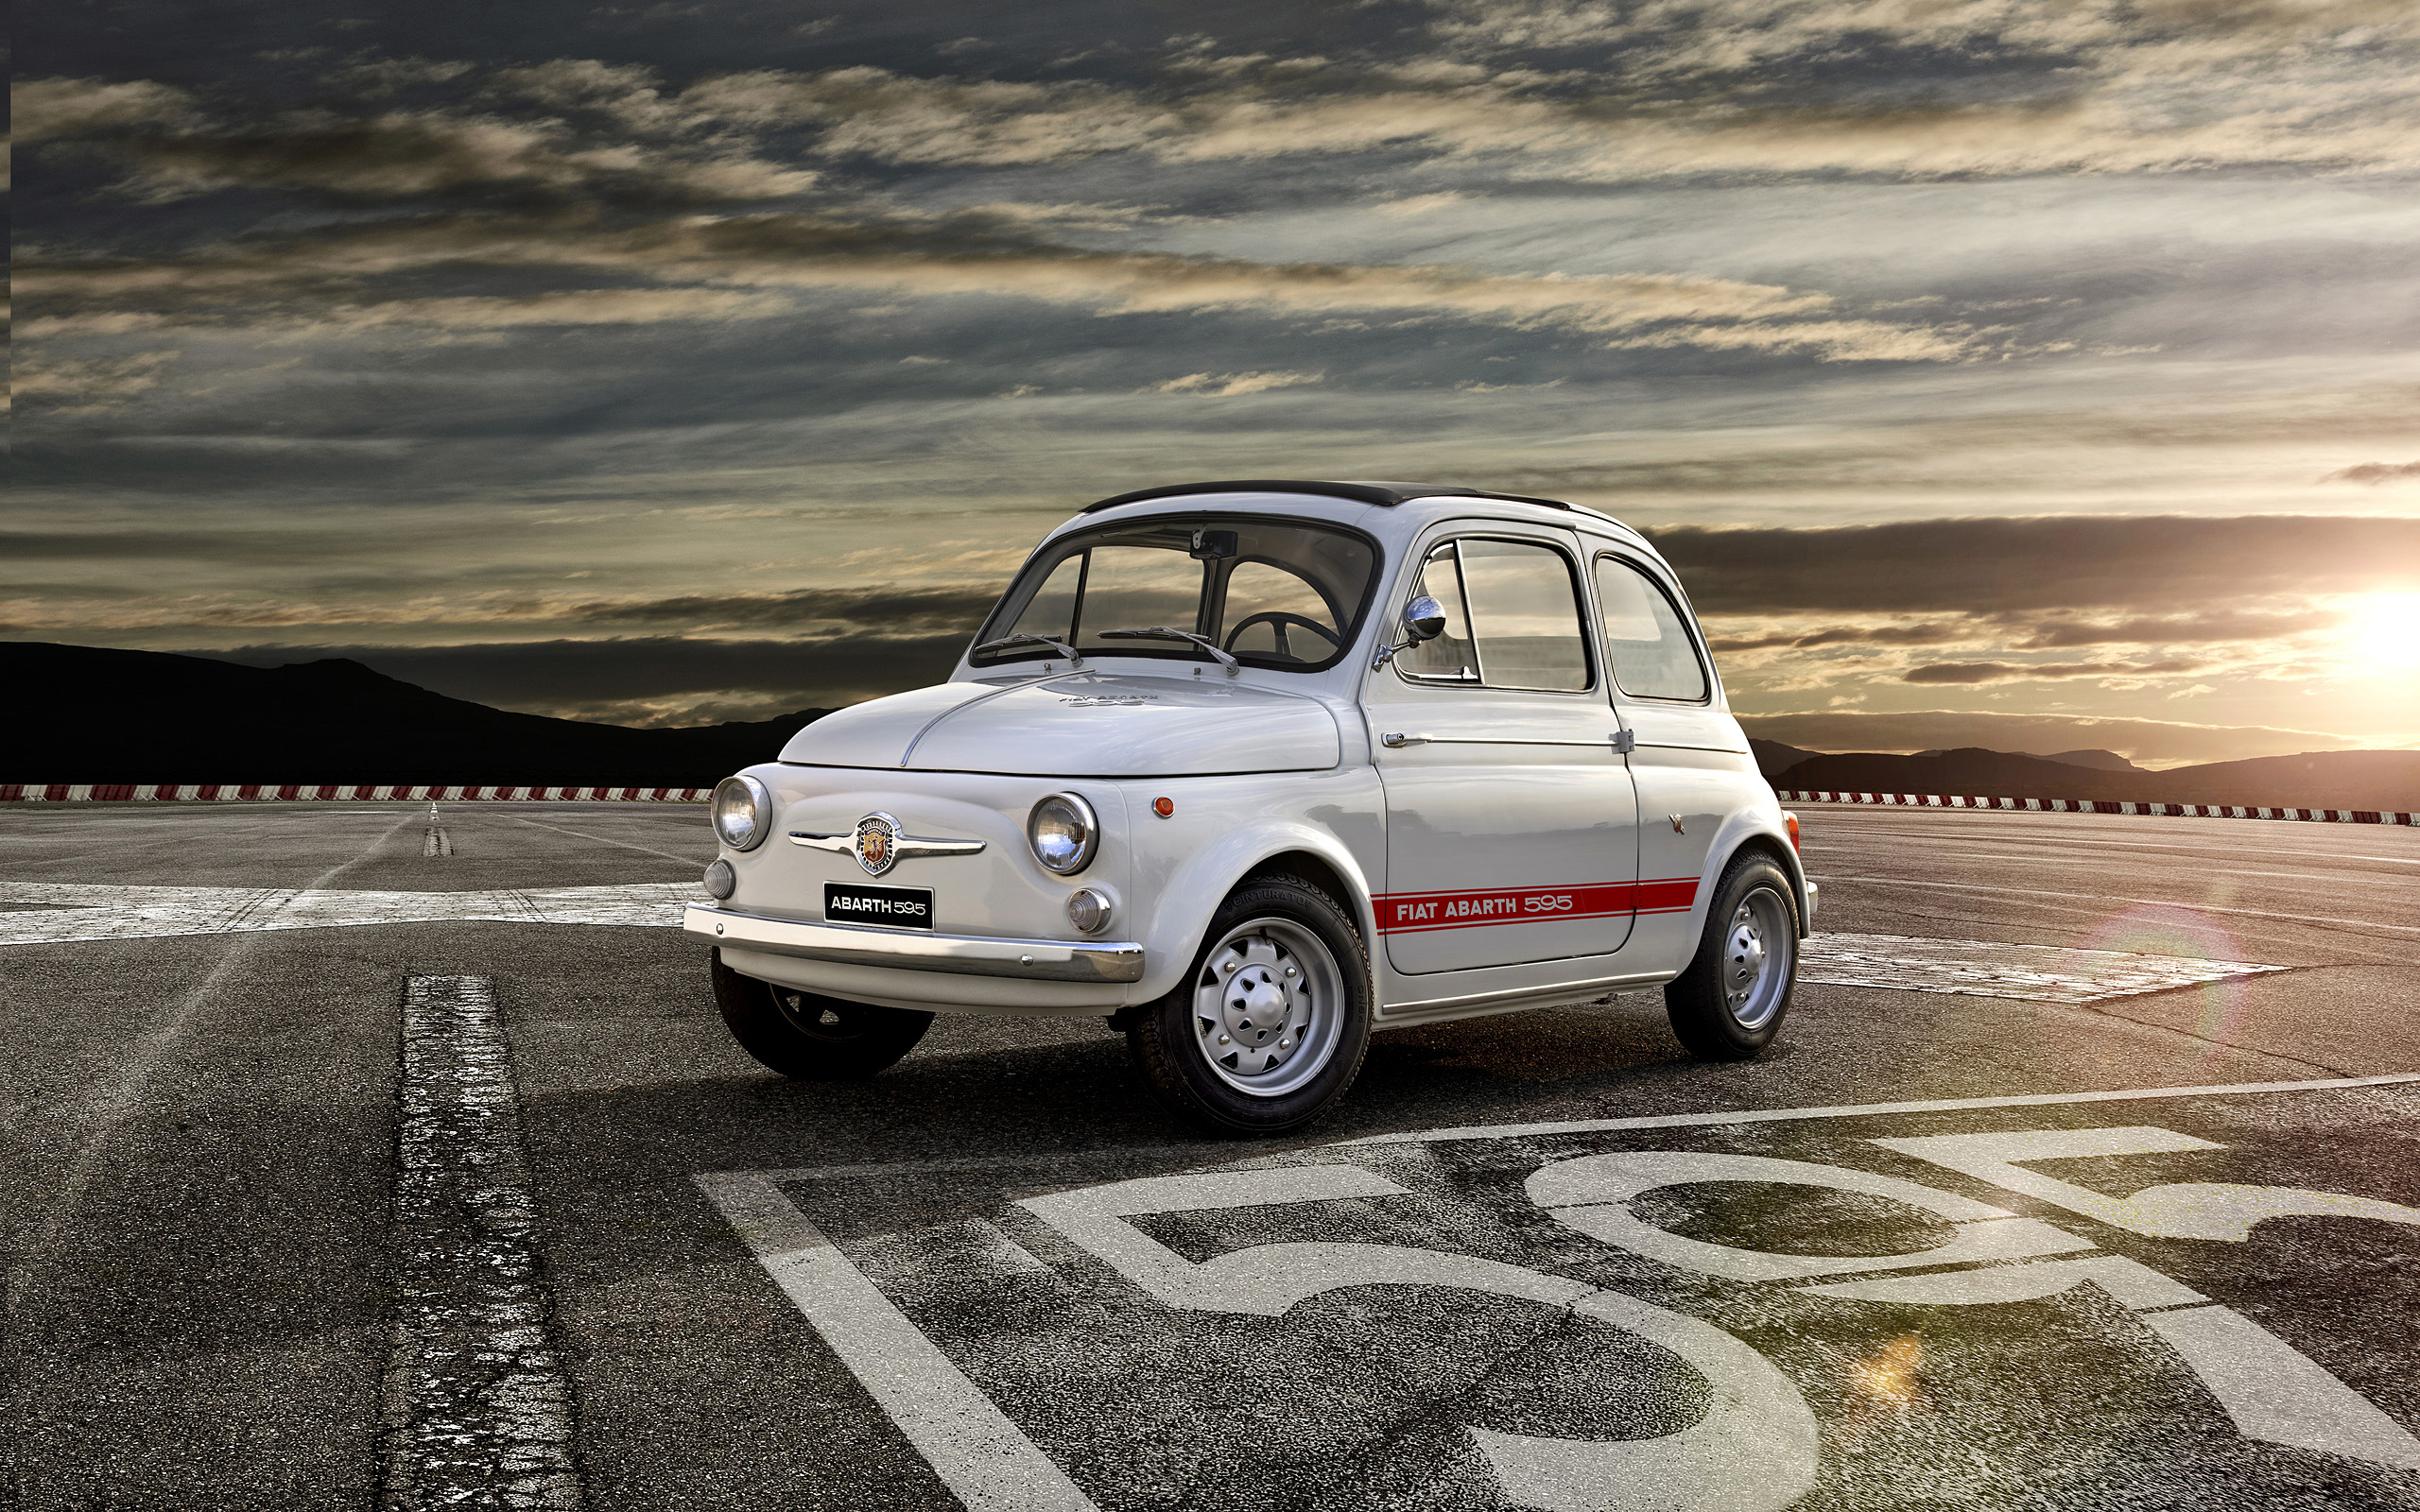  2014 Fiat 595 Abarth 50th Anniversary Wallpaper.